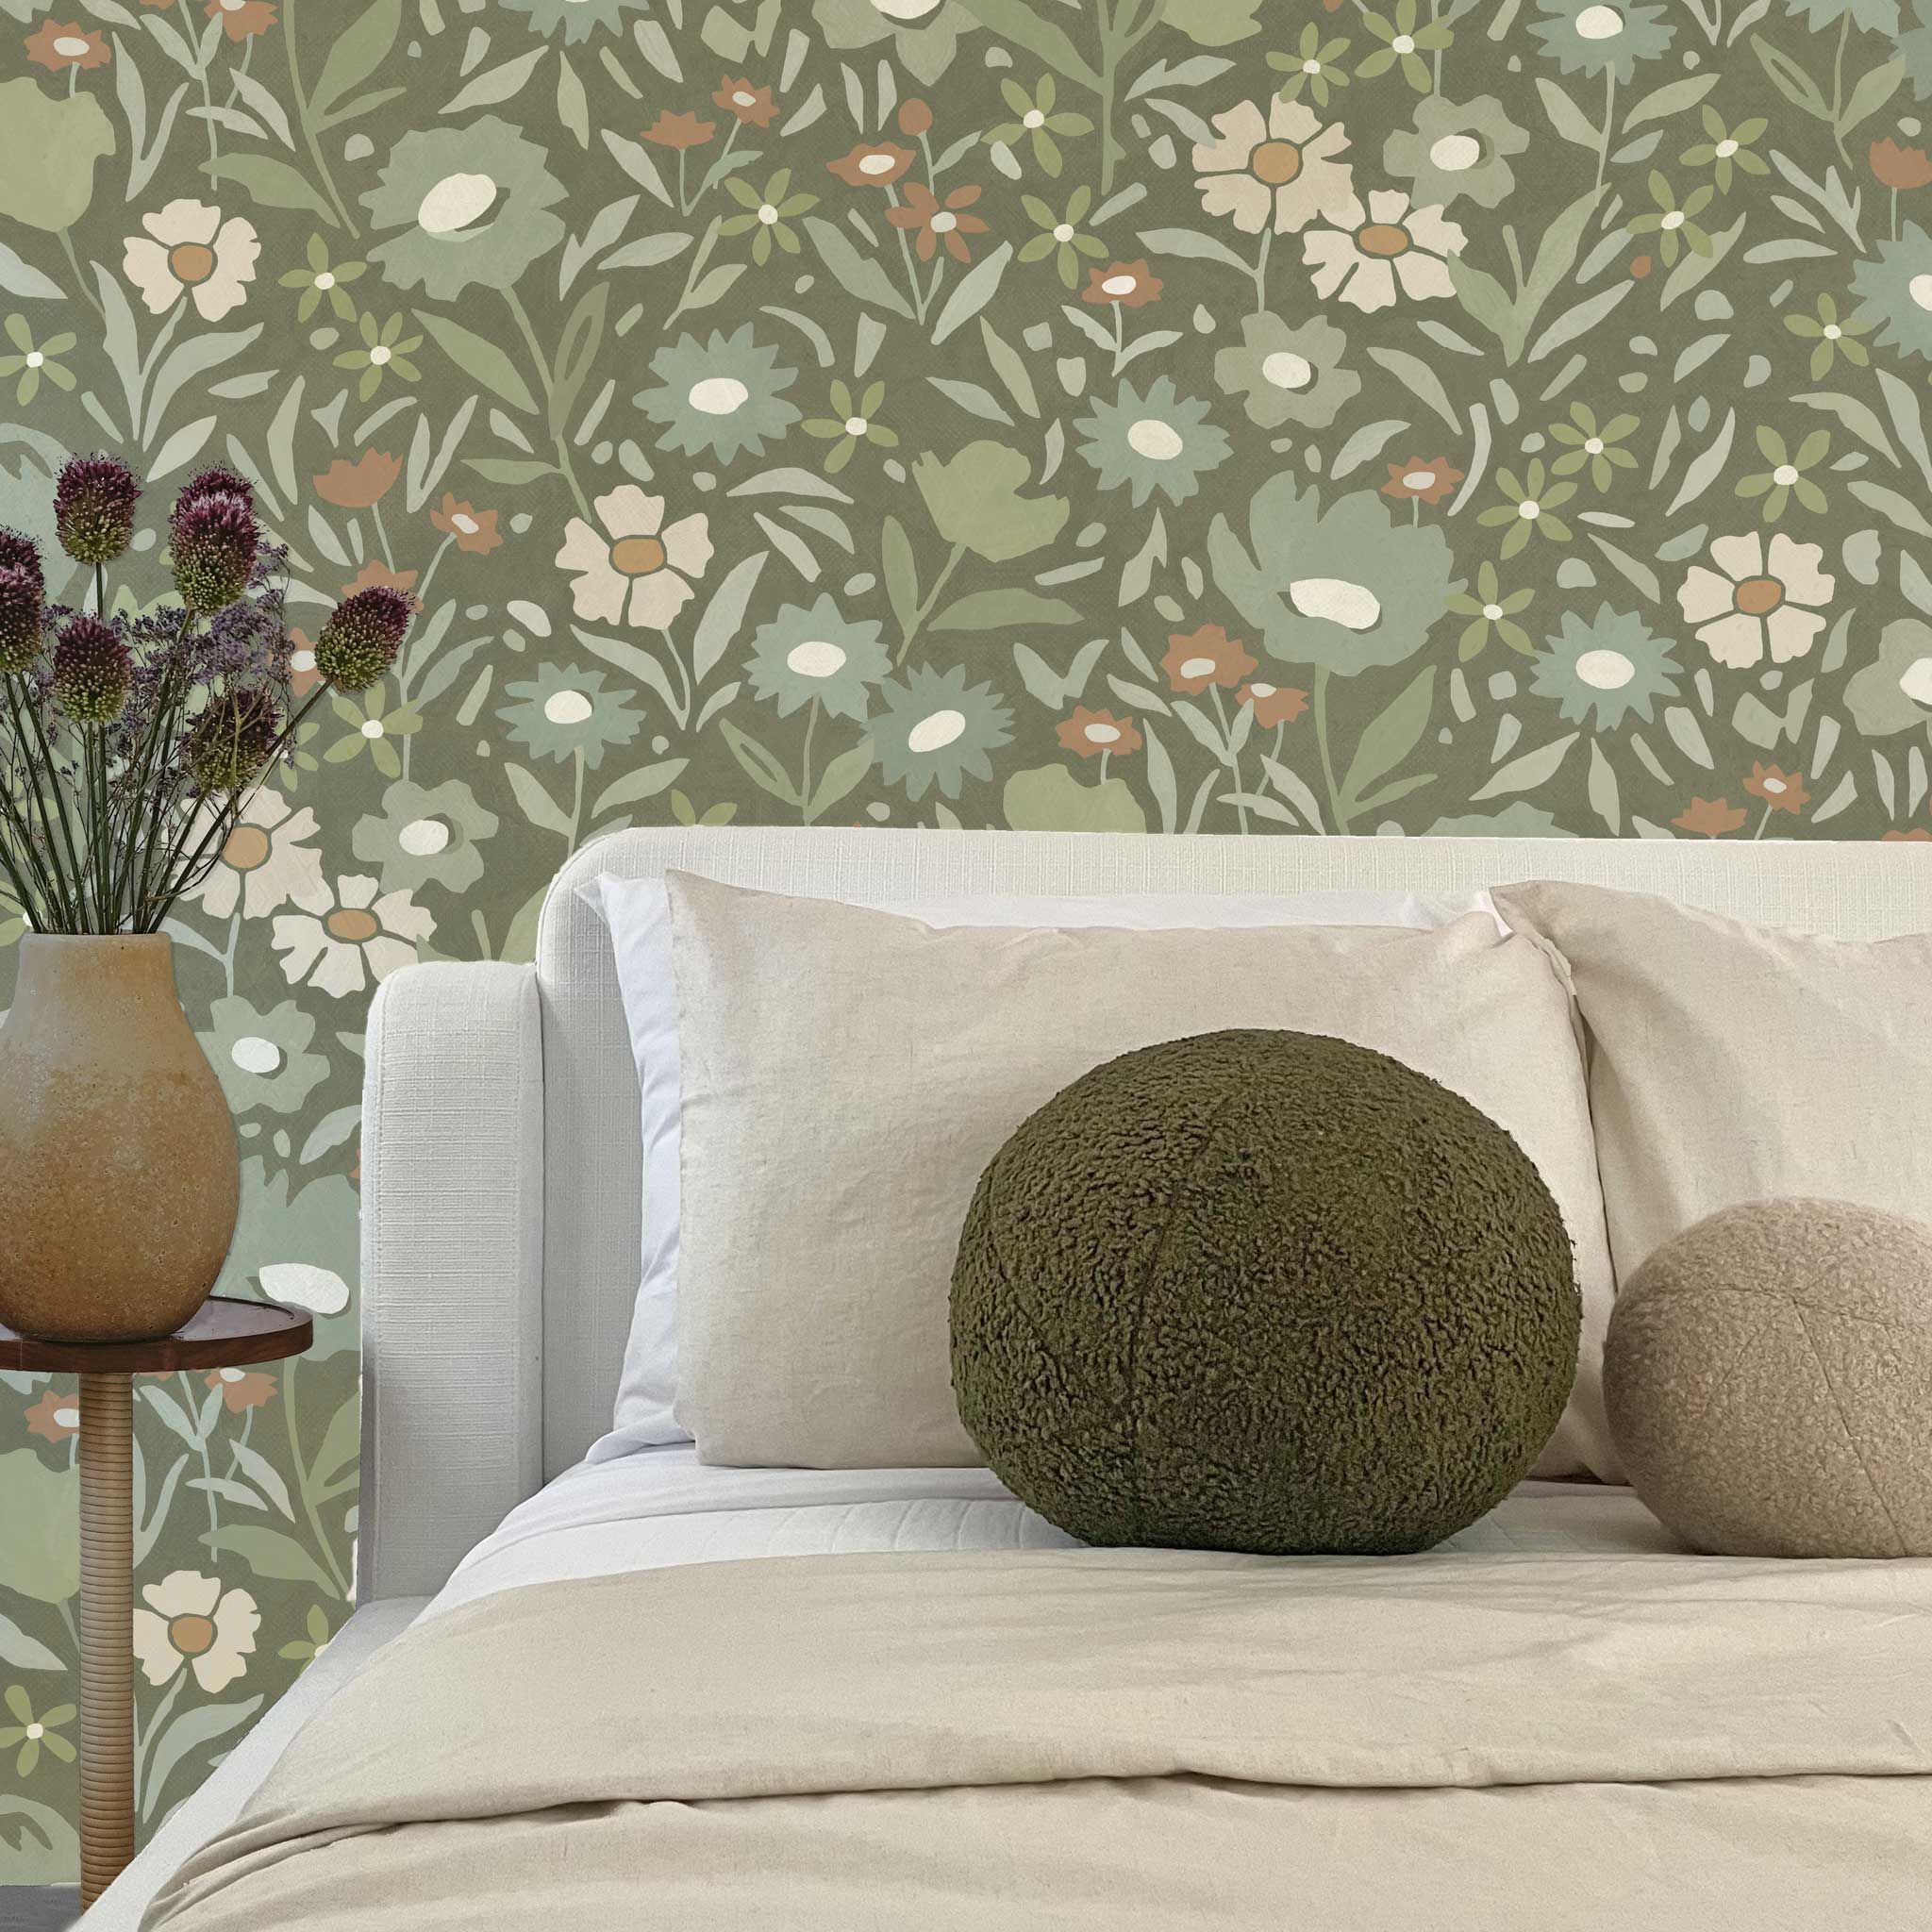 Habita wallpaper design -green Maude floral pattern in bedroom